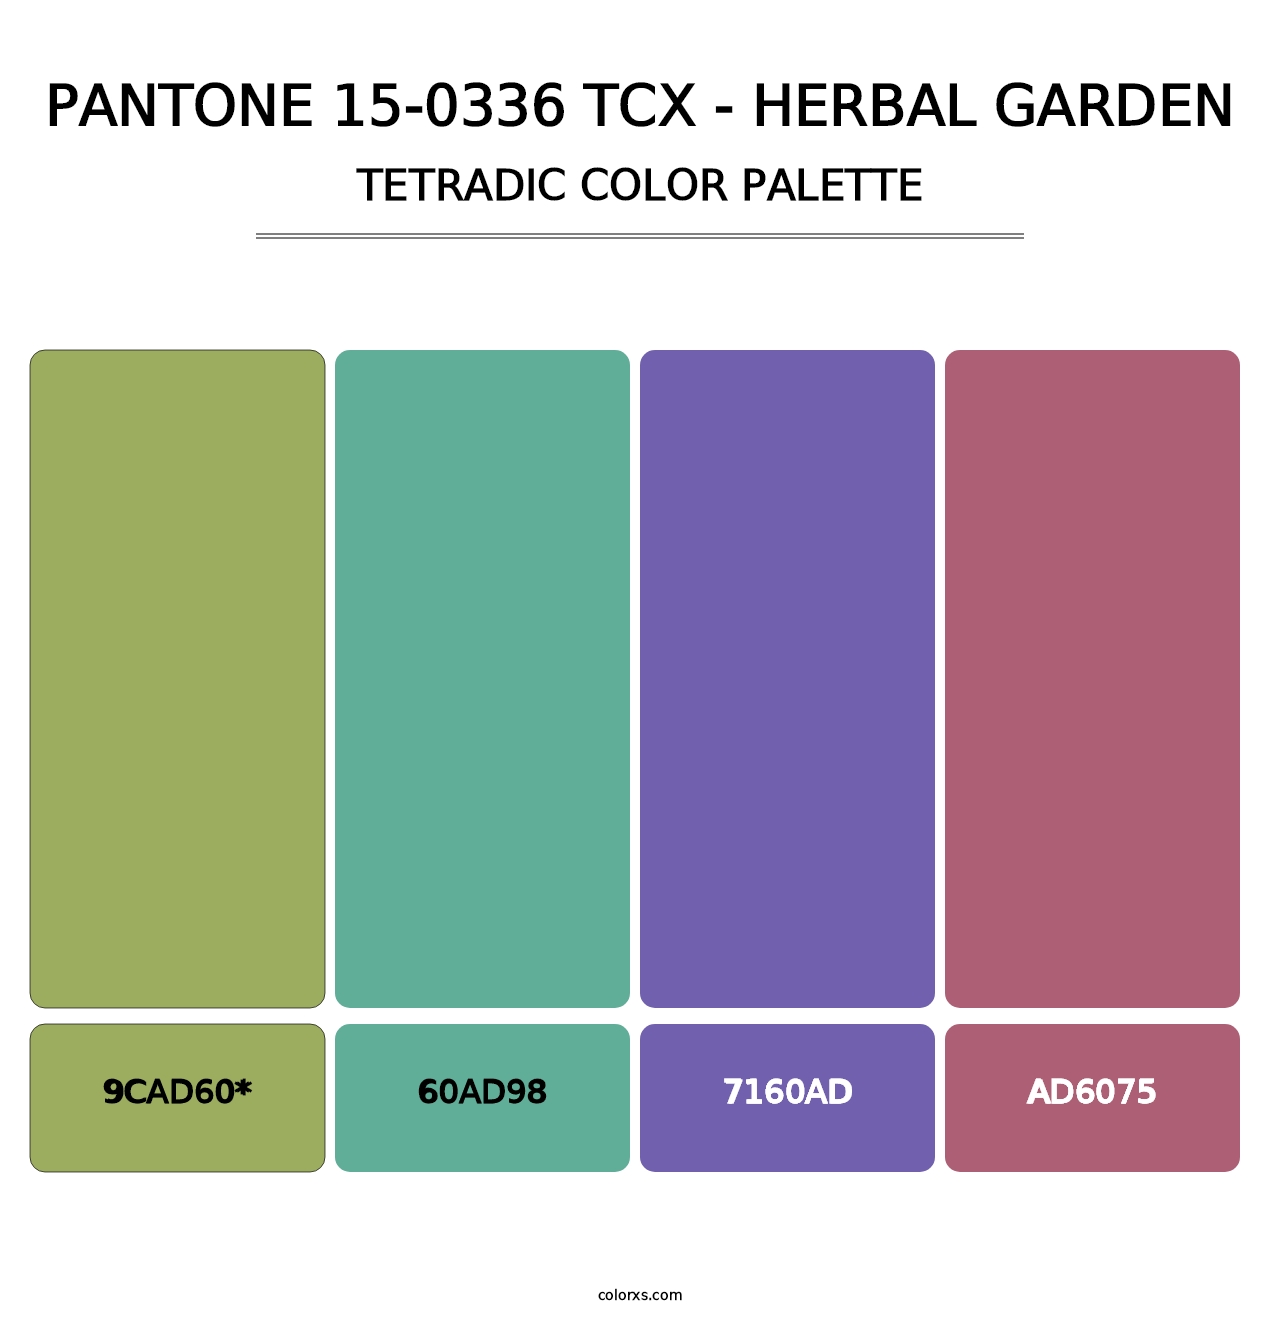 PANTONE 15-0336 TCX - Herbal Garden - Tetradic Color Palette